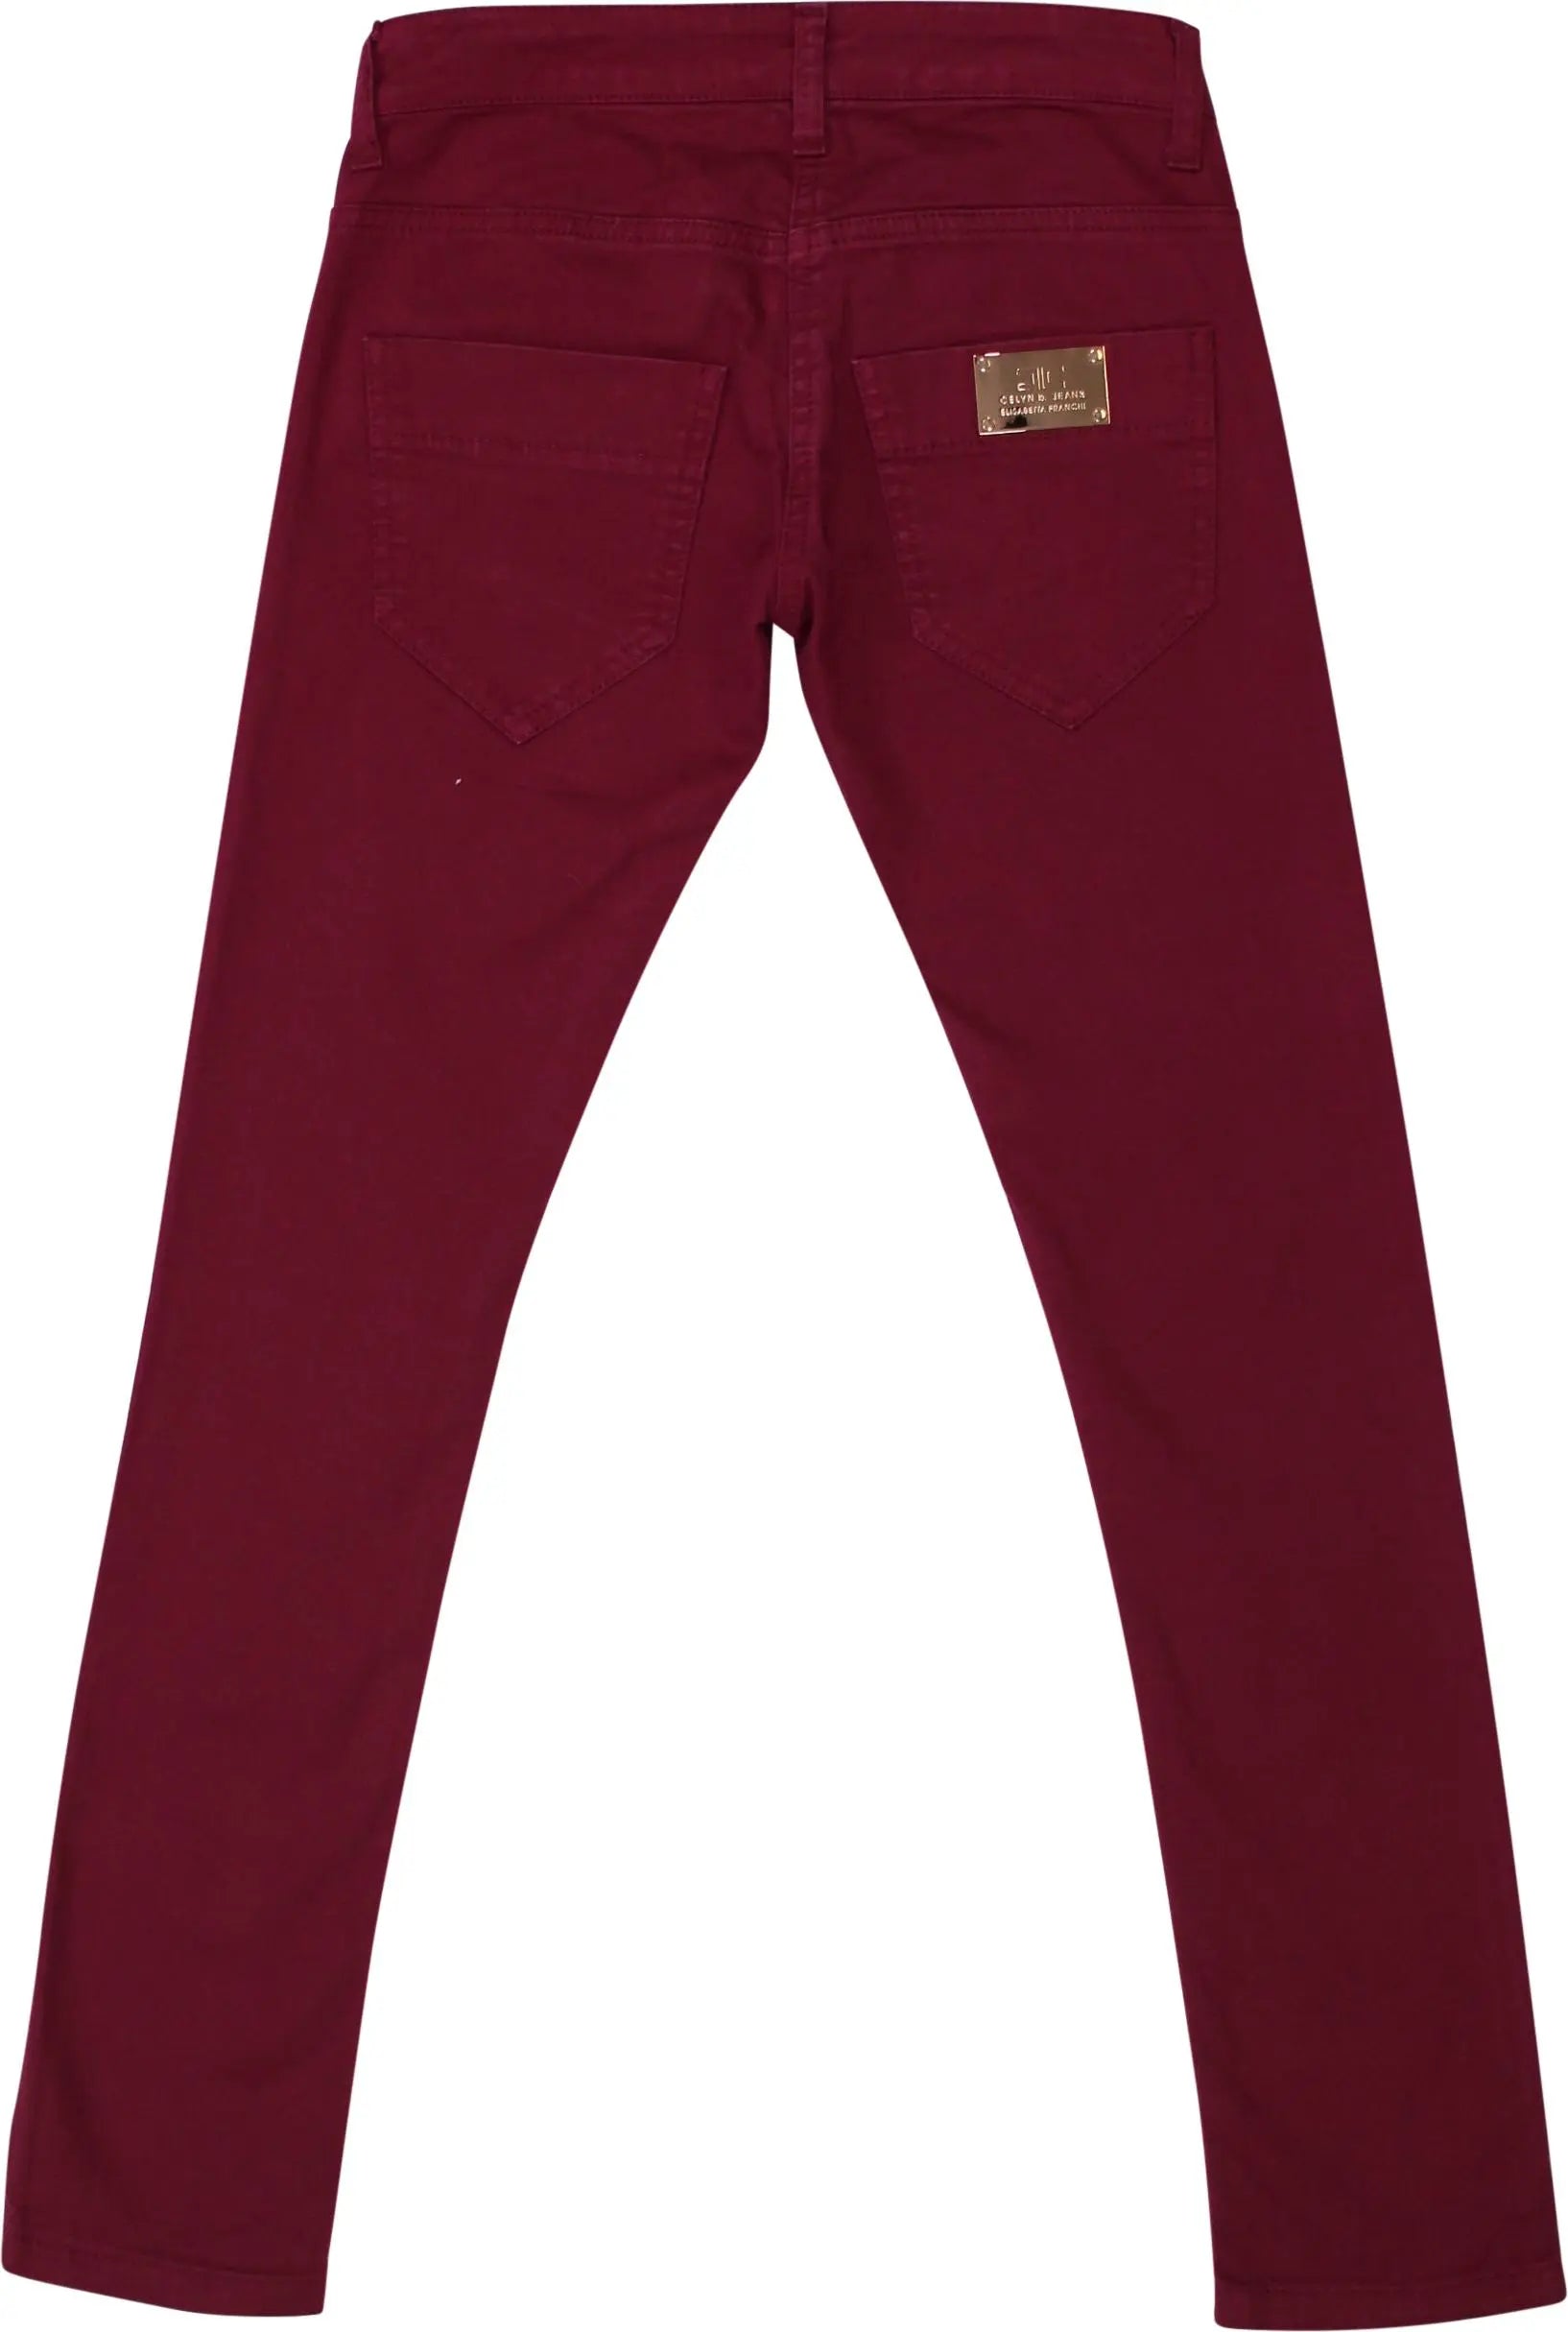 Elisabetta Franchi - Purple Jeans by Elisabetta Franchi- ThriftTale.com - Vintage and second handclothing